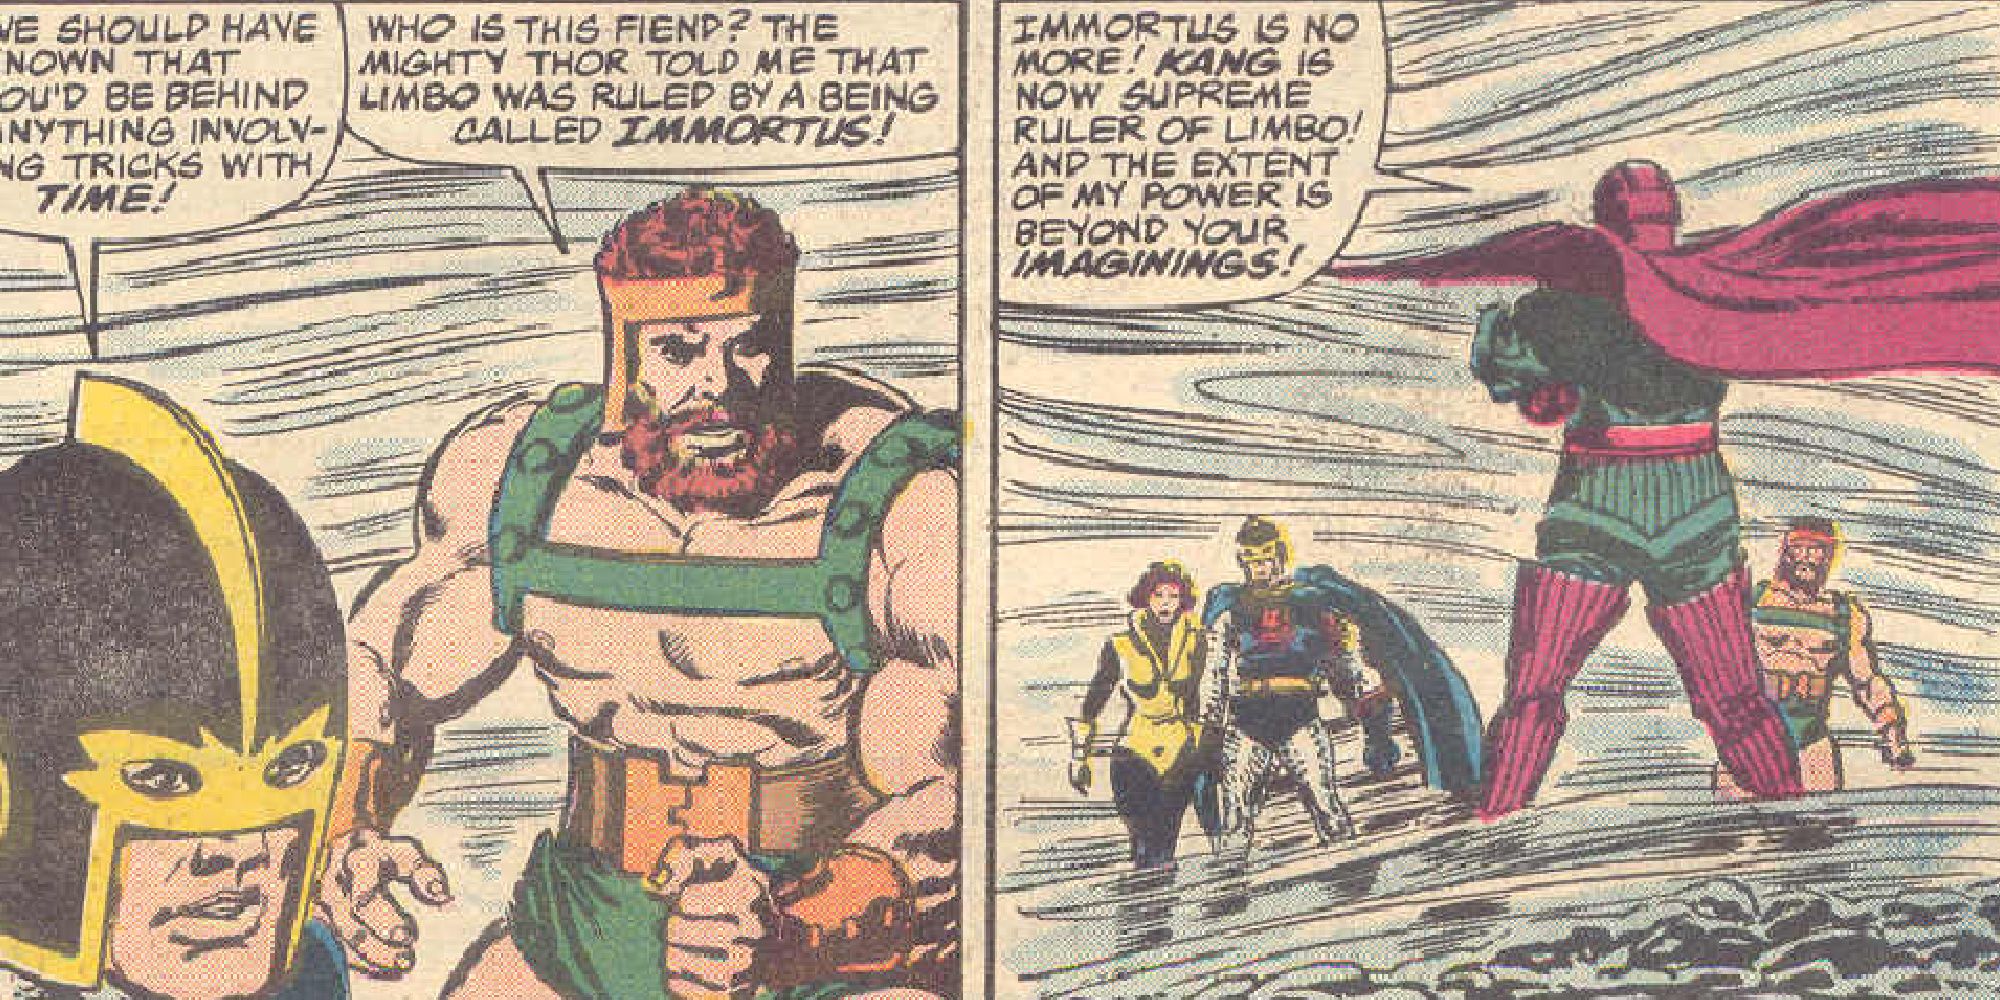 Hercules encounters Kang The Conqueror in Marvel Comics.